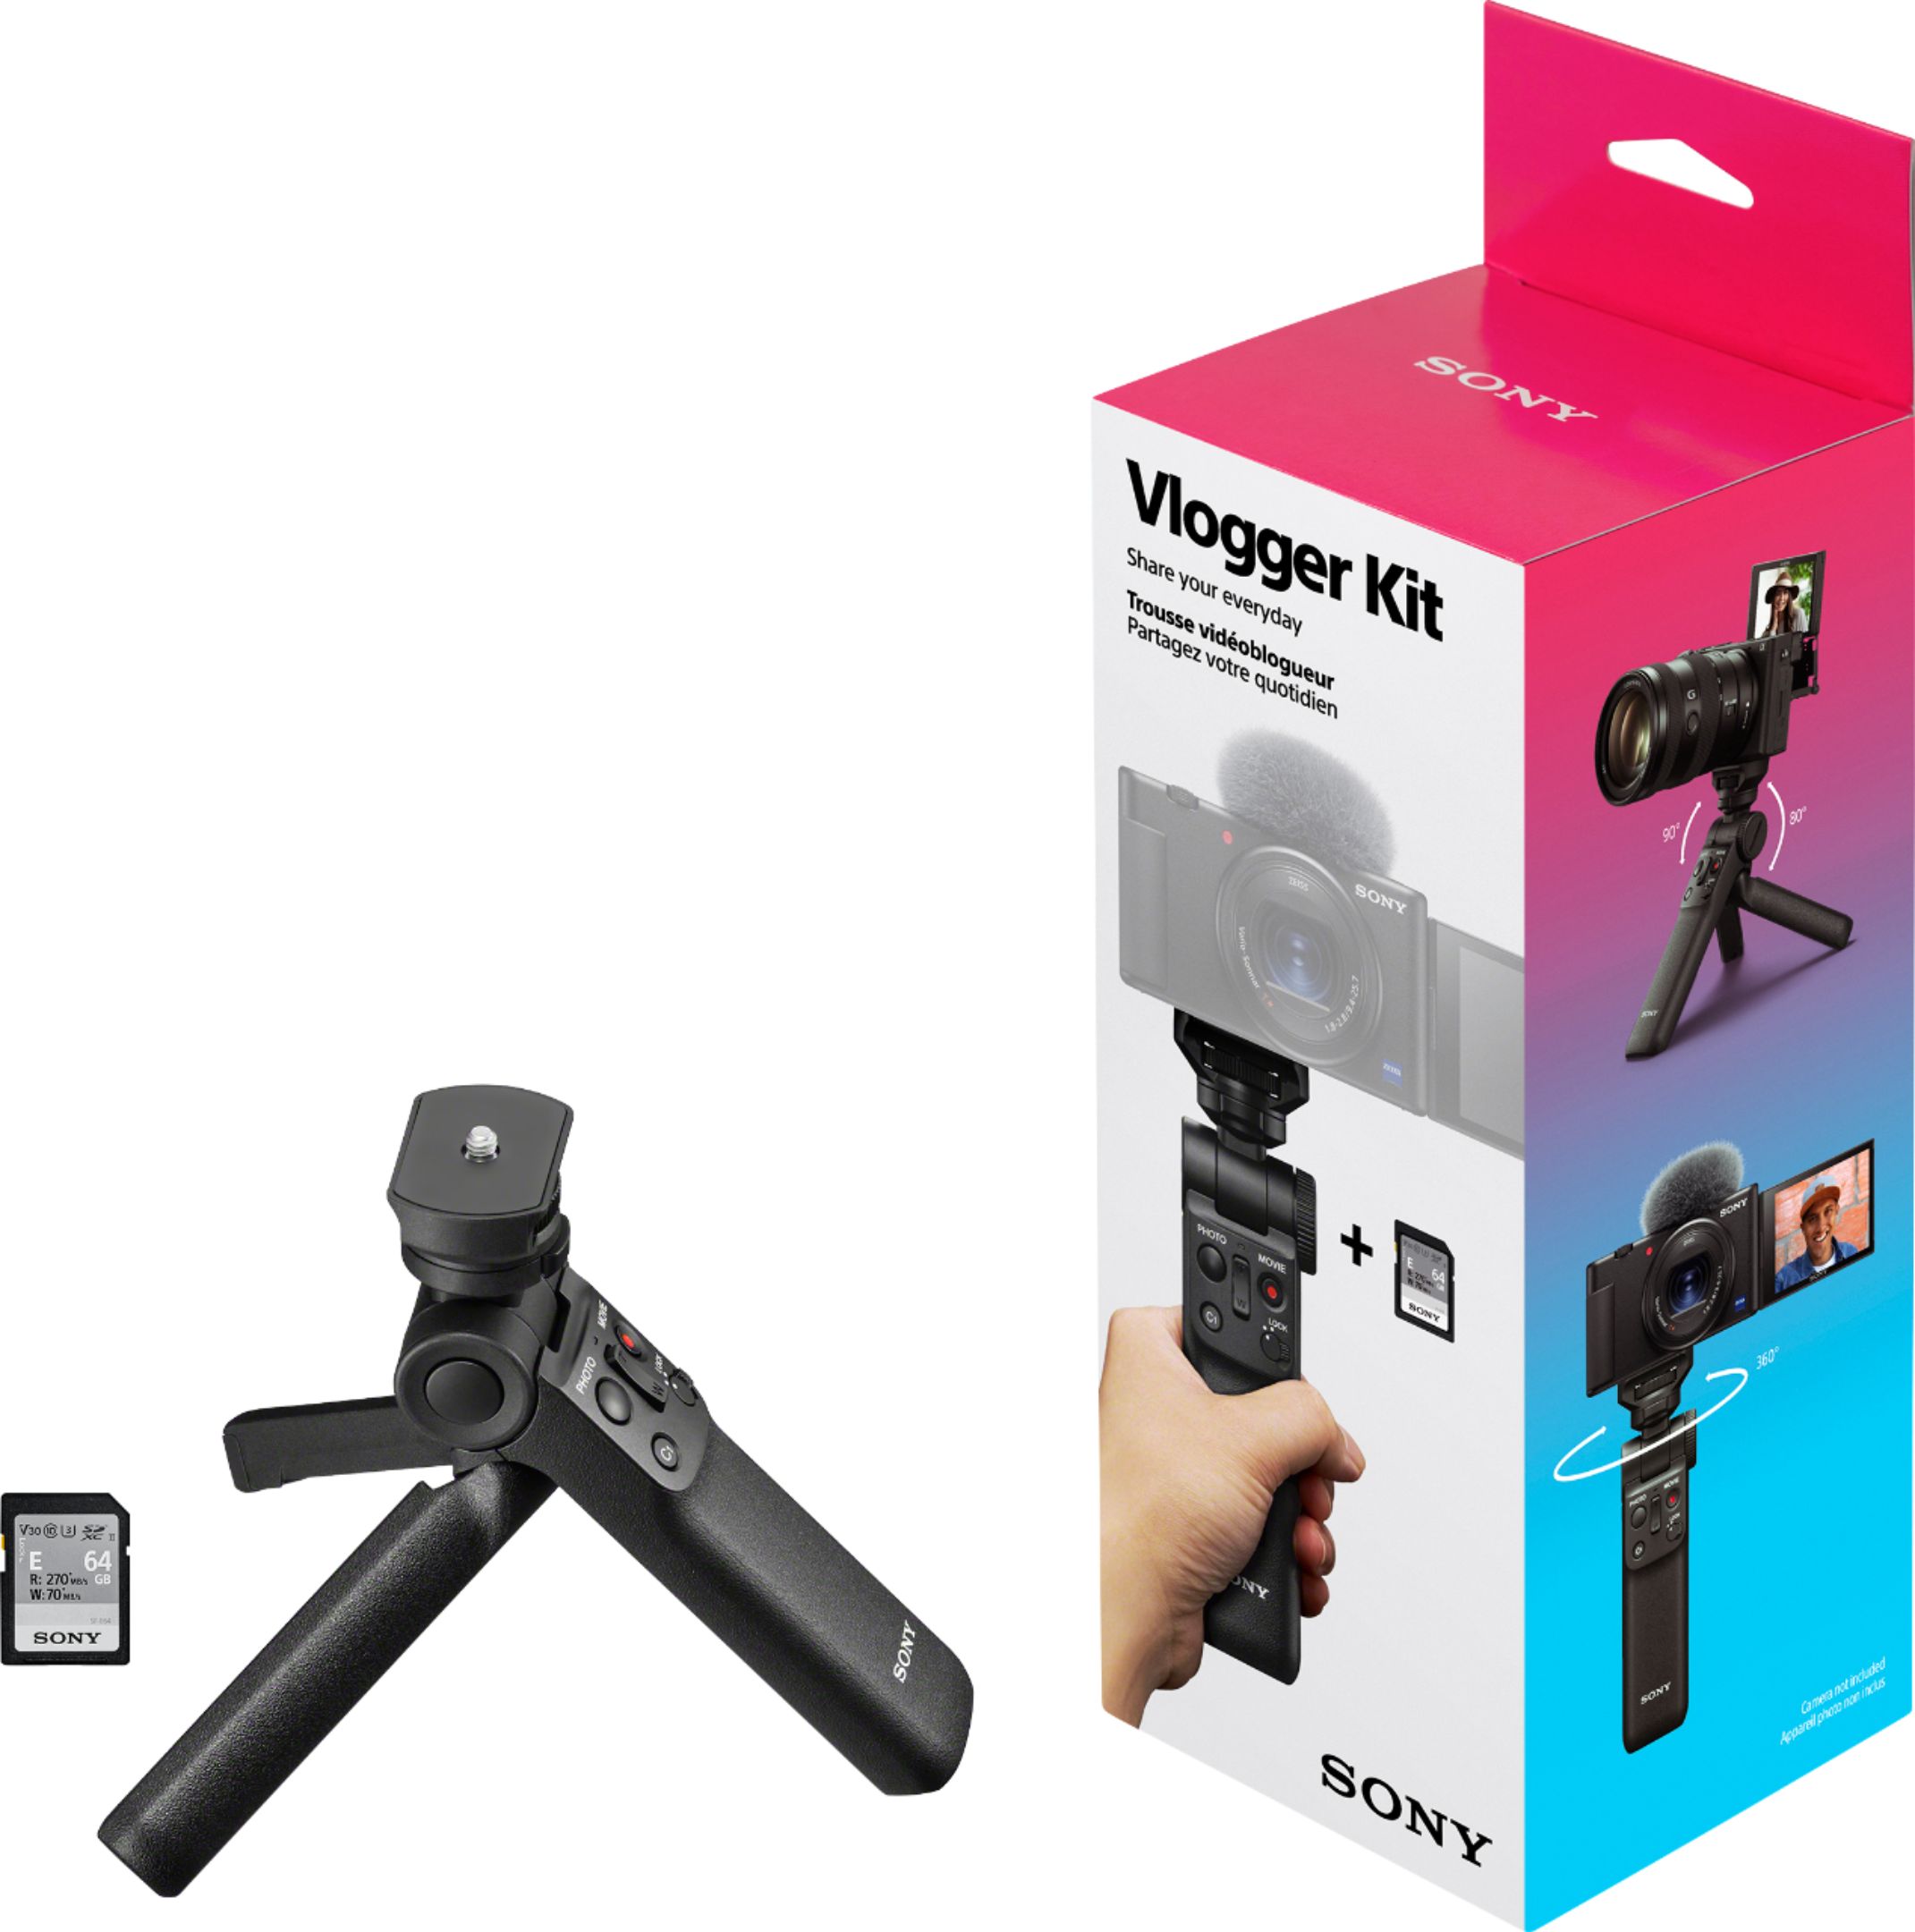 Angle View: Sony - Vlogger Accessory Kit - Black